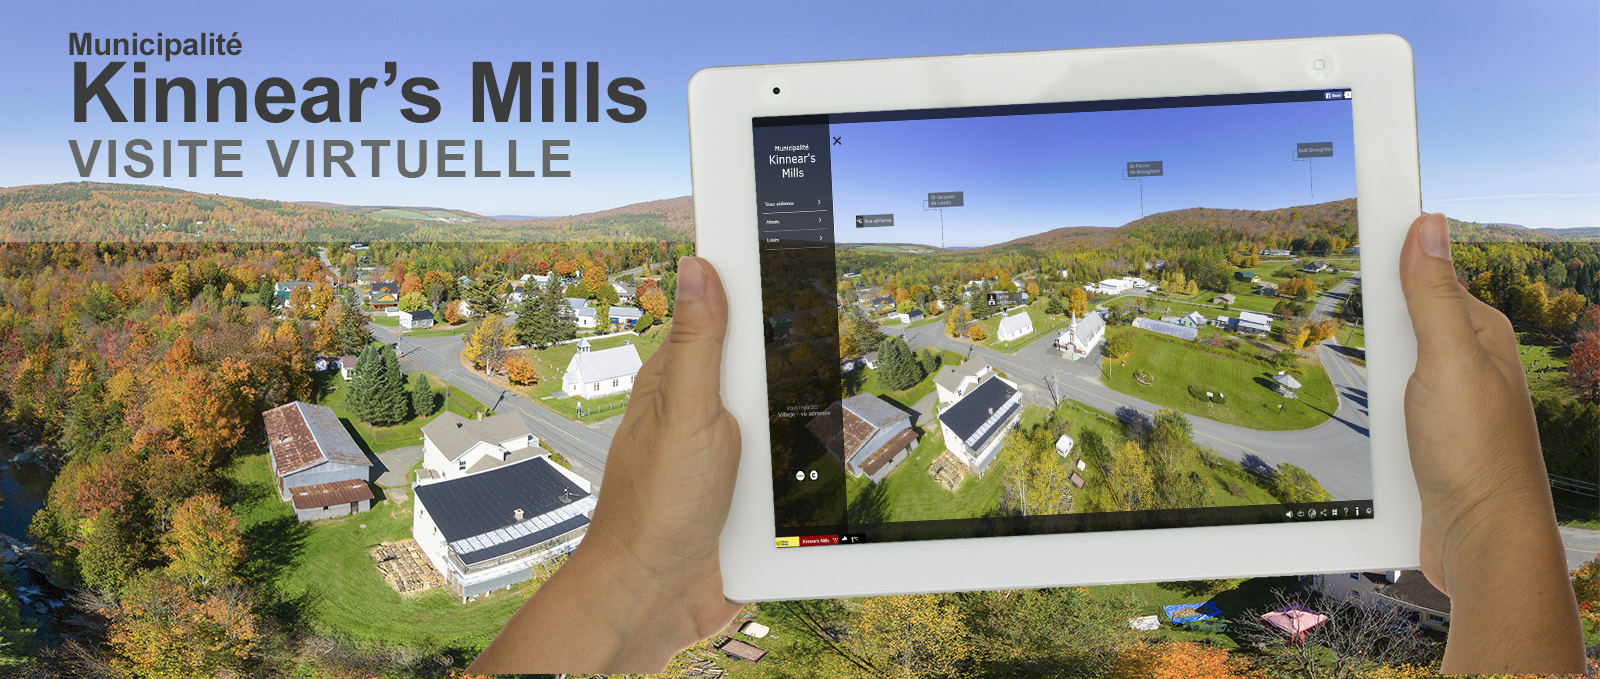 Visite virtuelle Municipalité de Kinnear's Mills